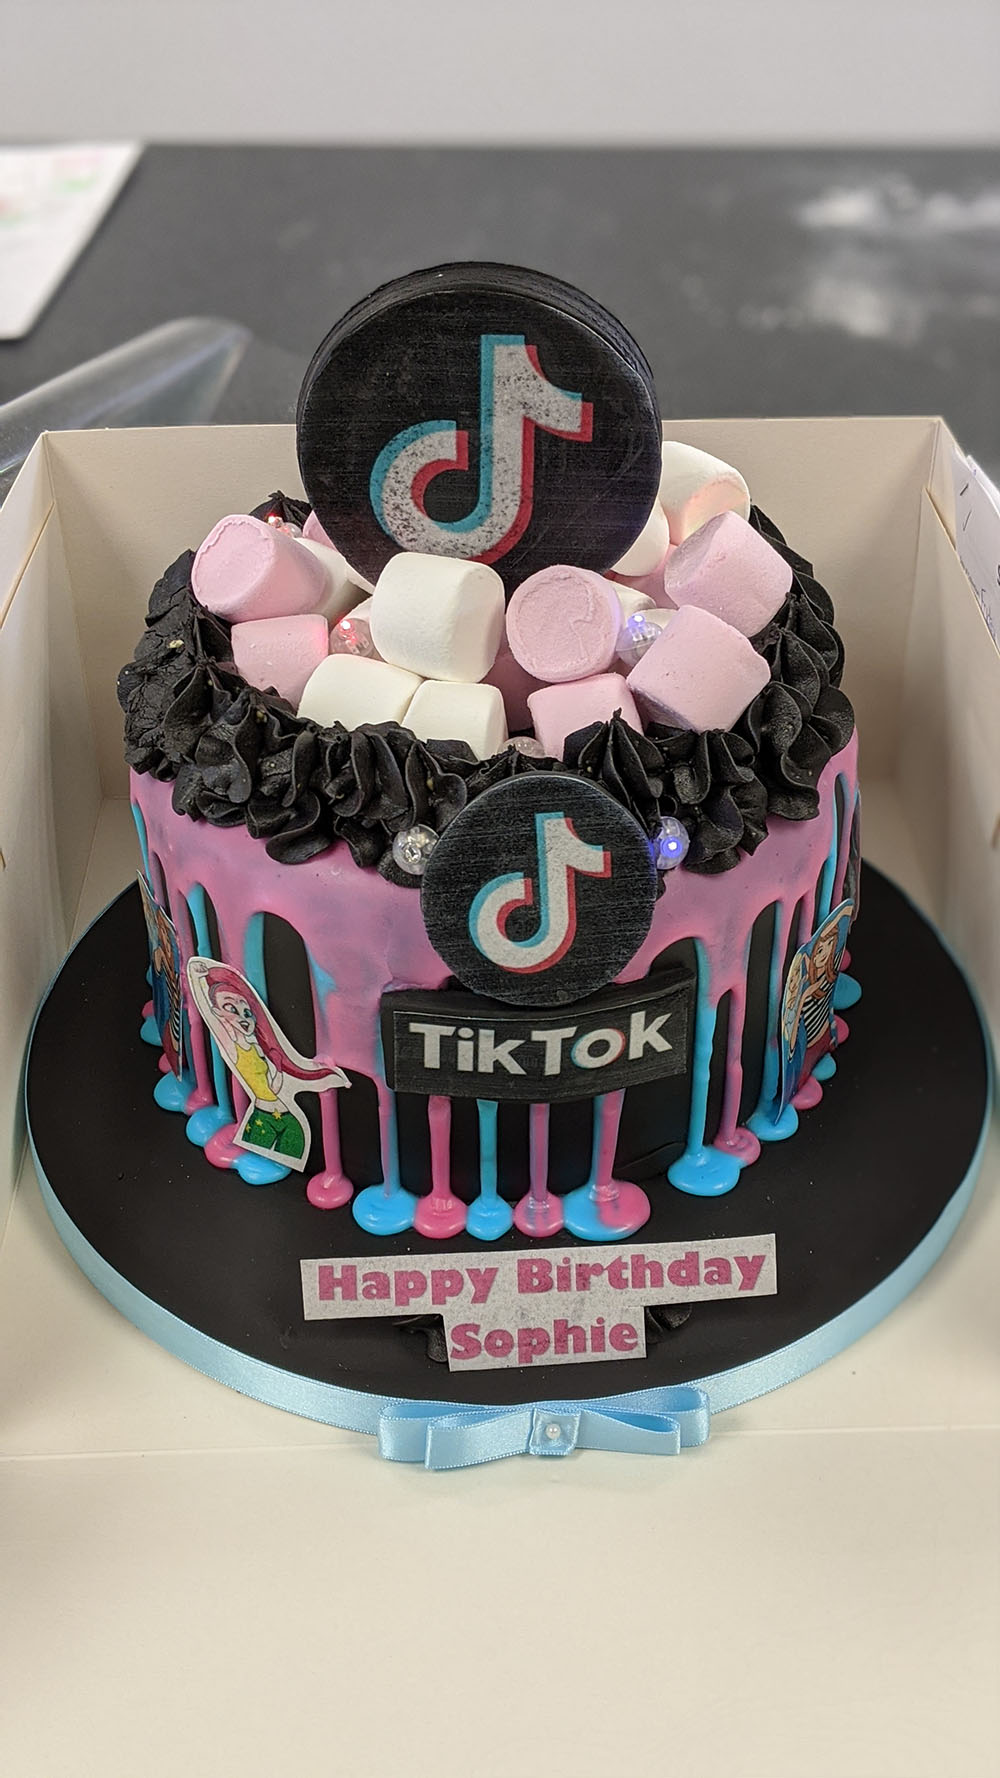 Tiktok cake design With flashing LED lights - Sweet Temptation Cakes